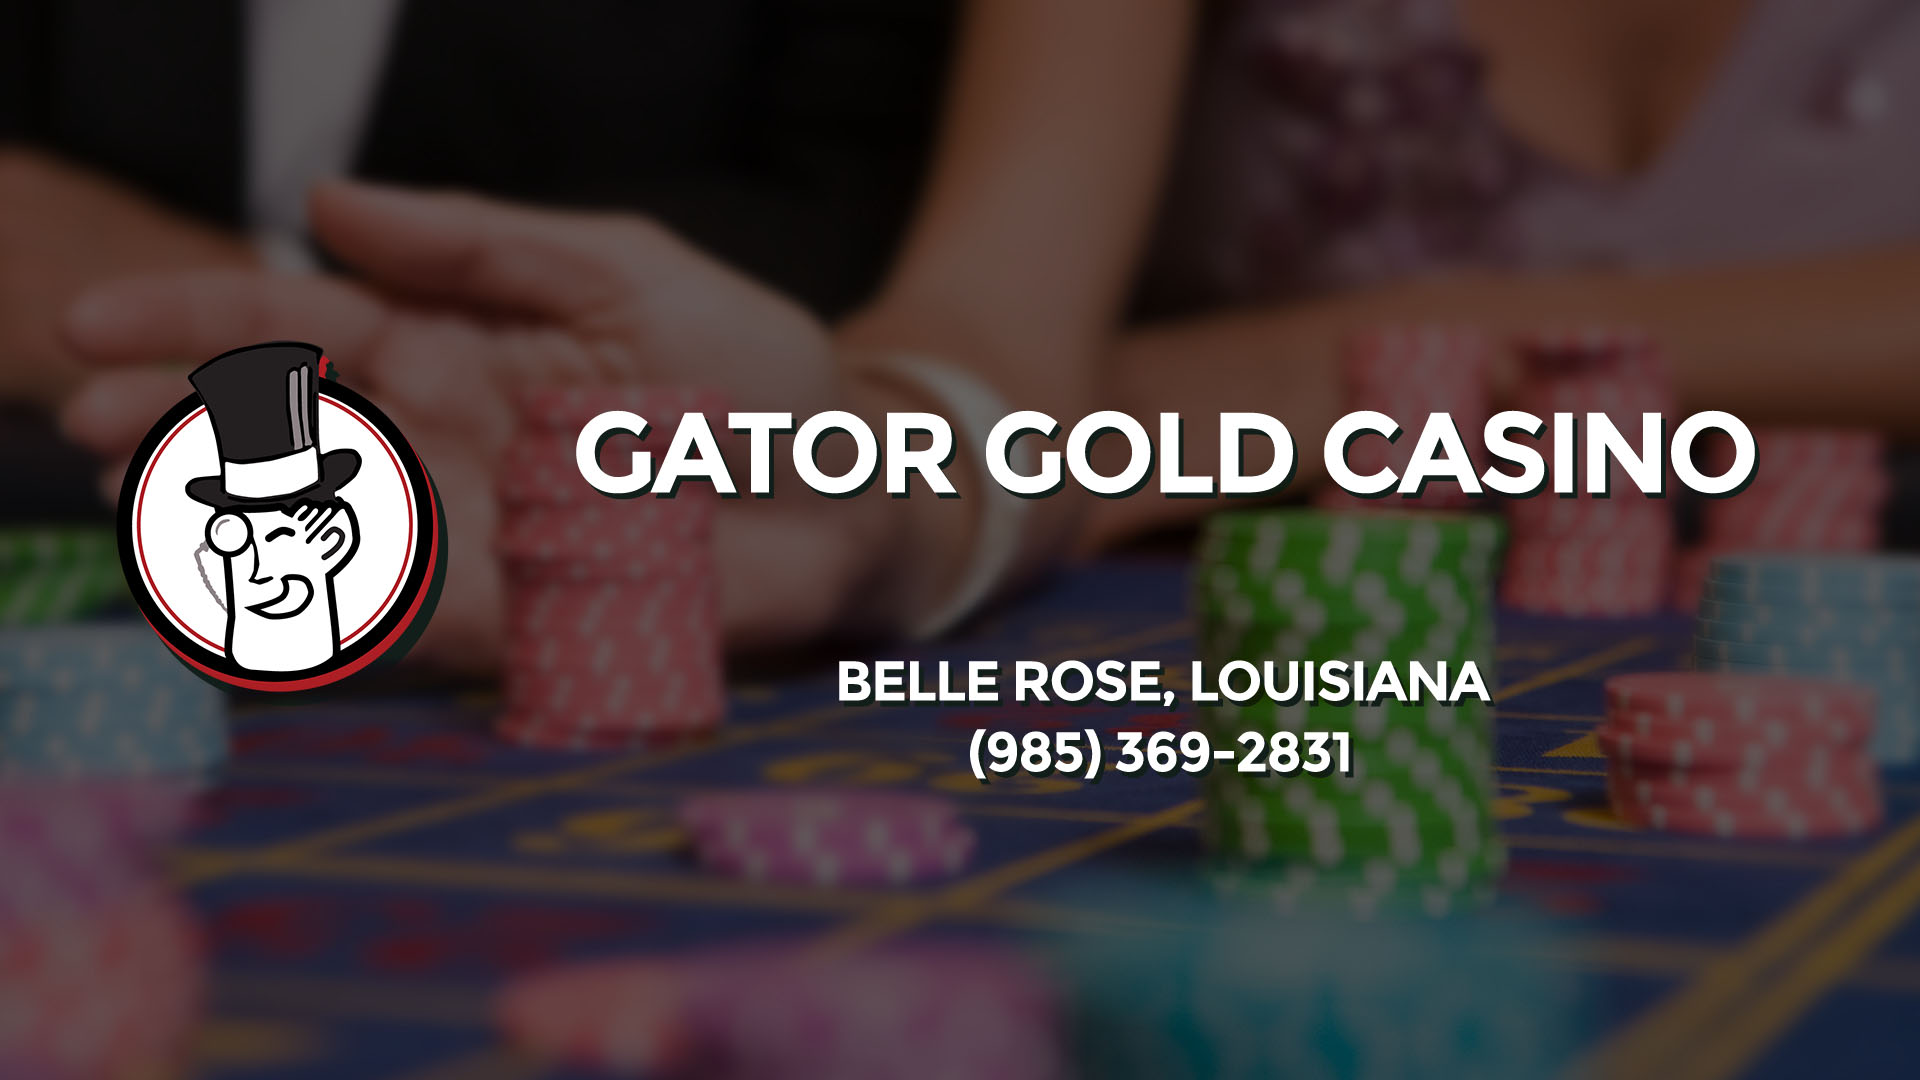 Gator gold casino belle rose la menu